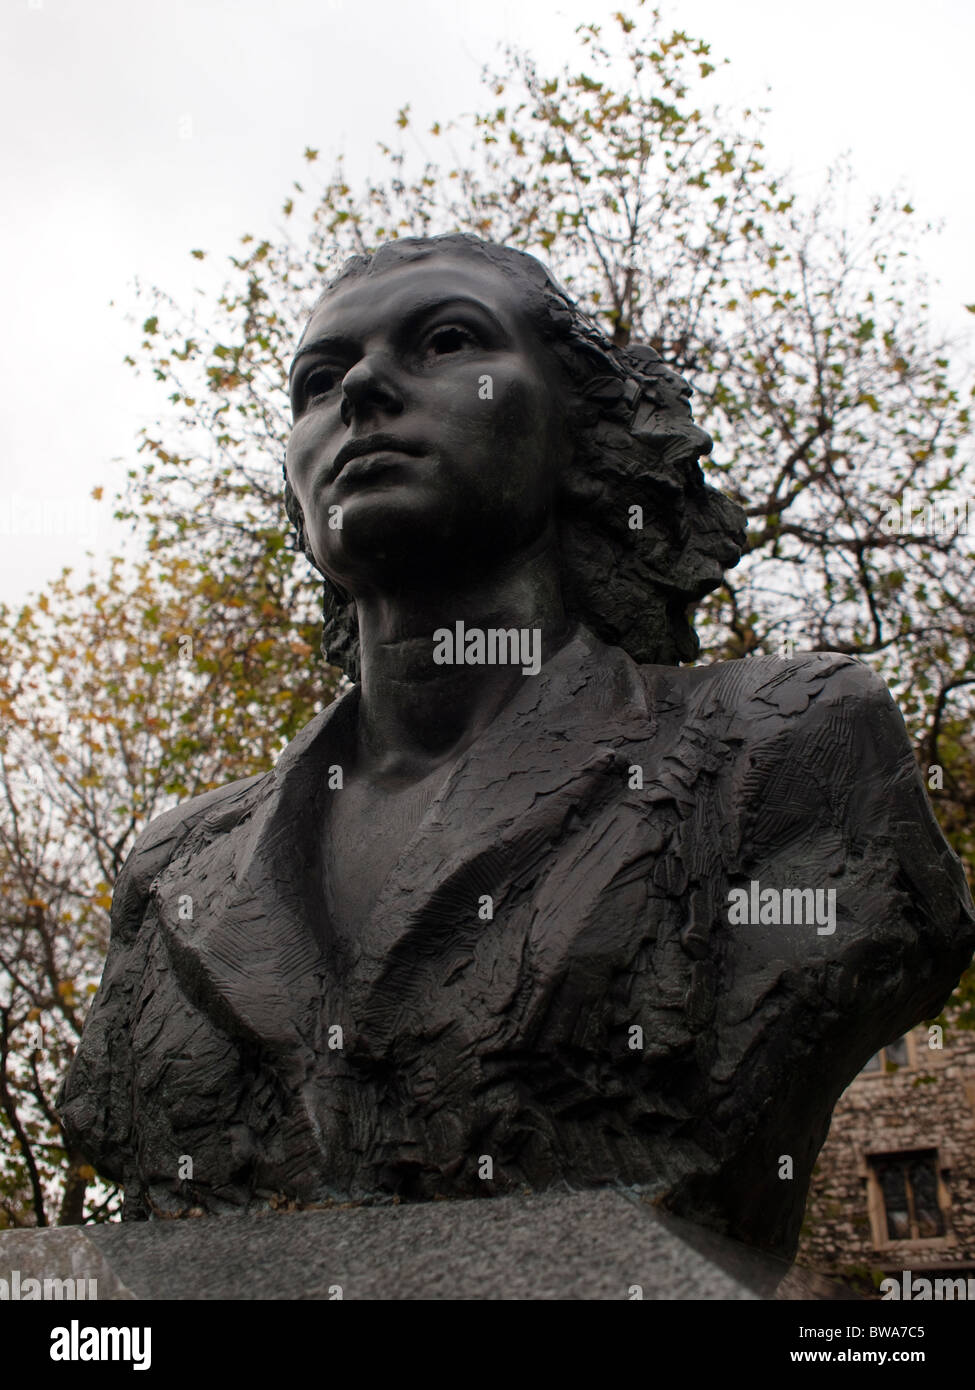 Violette Szabo Statue, London, by Karen Newman Stock Photo - Alamy